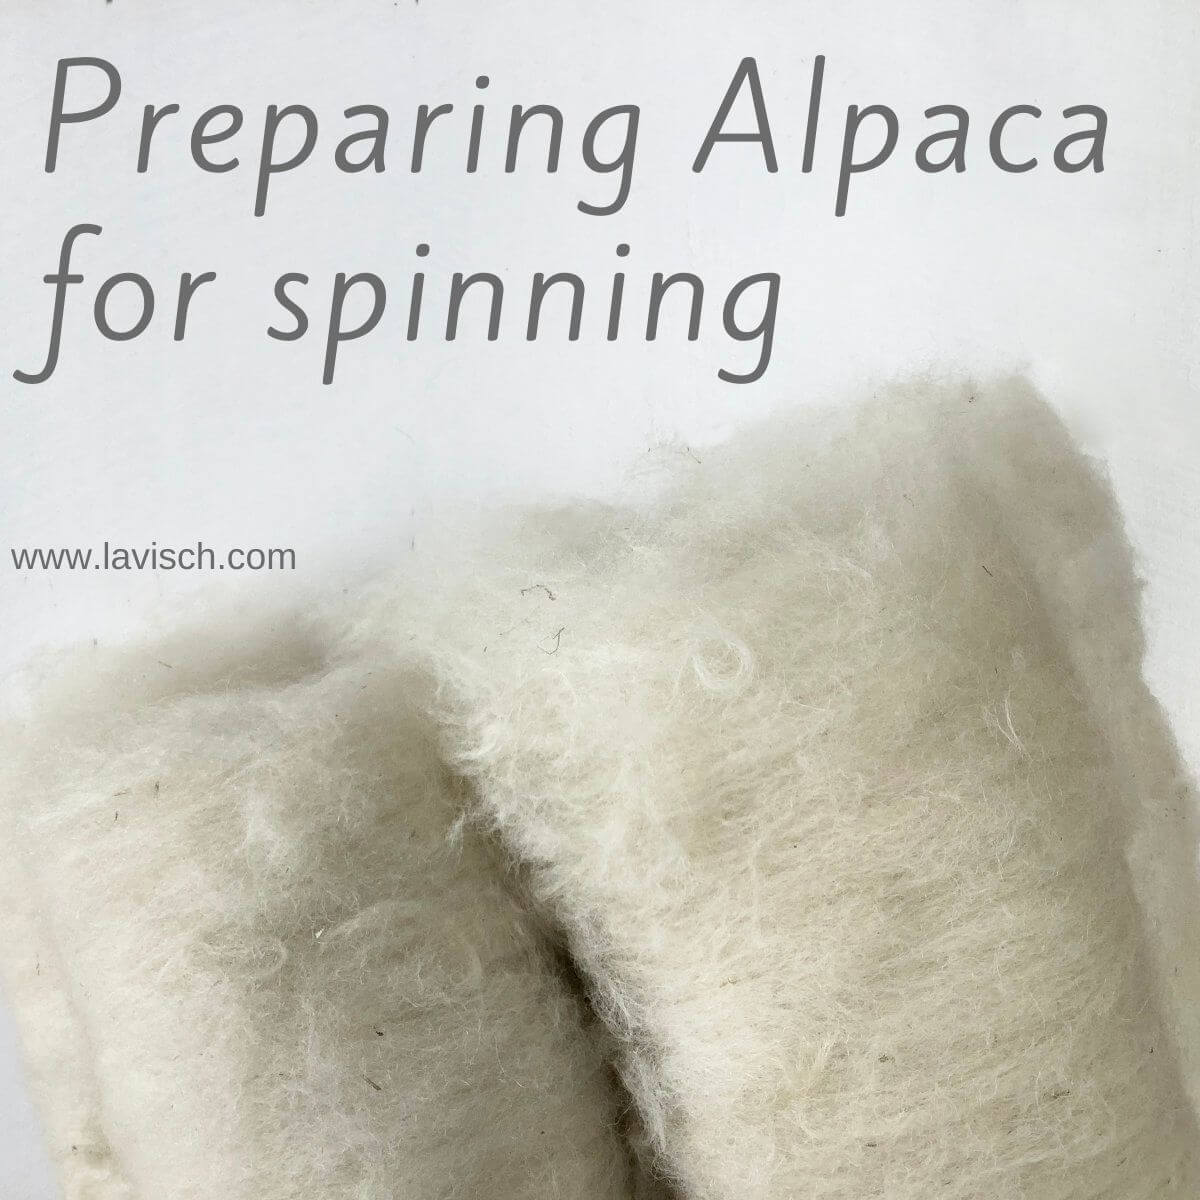 Master Spinning Alpaca Fiber in Our Free eBook!